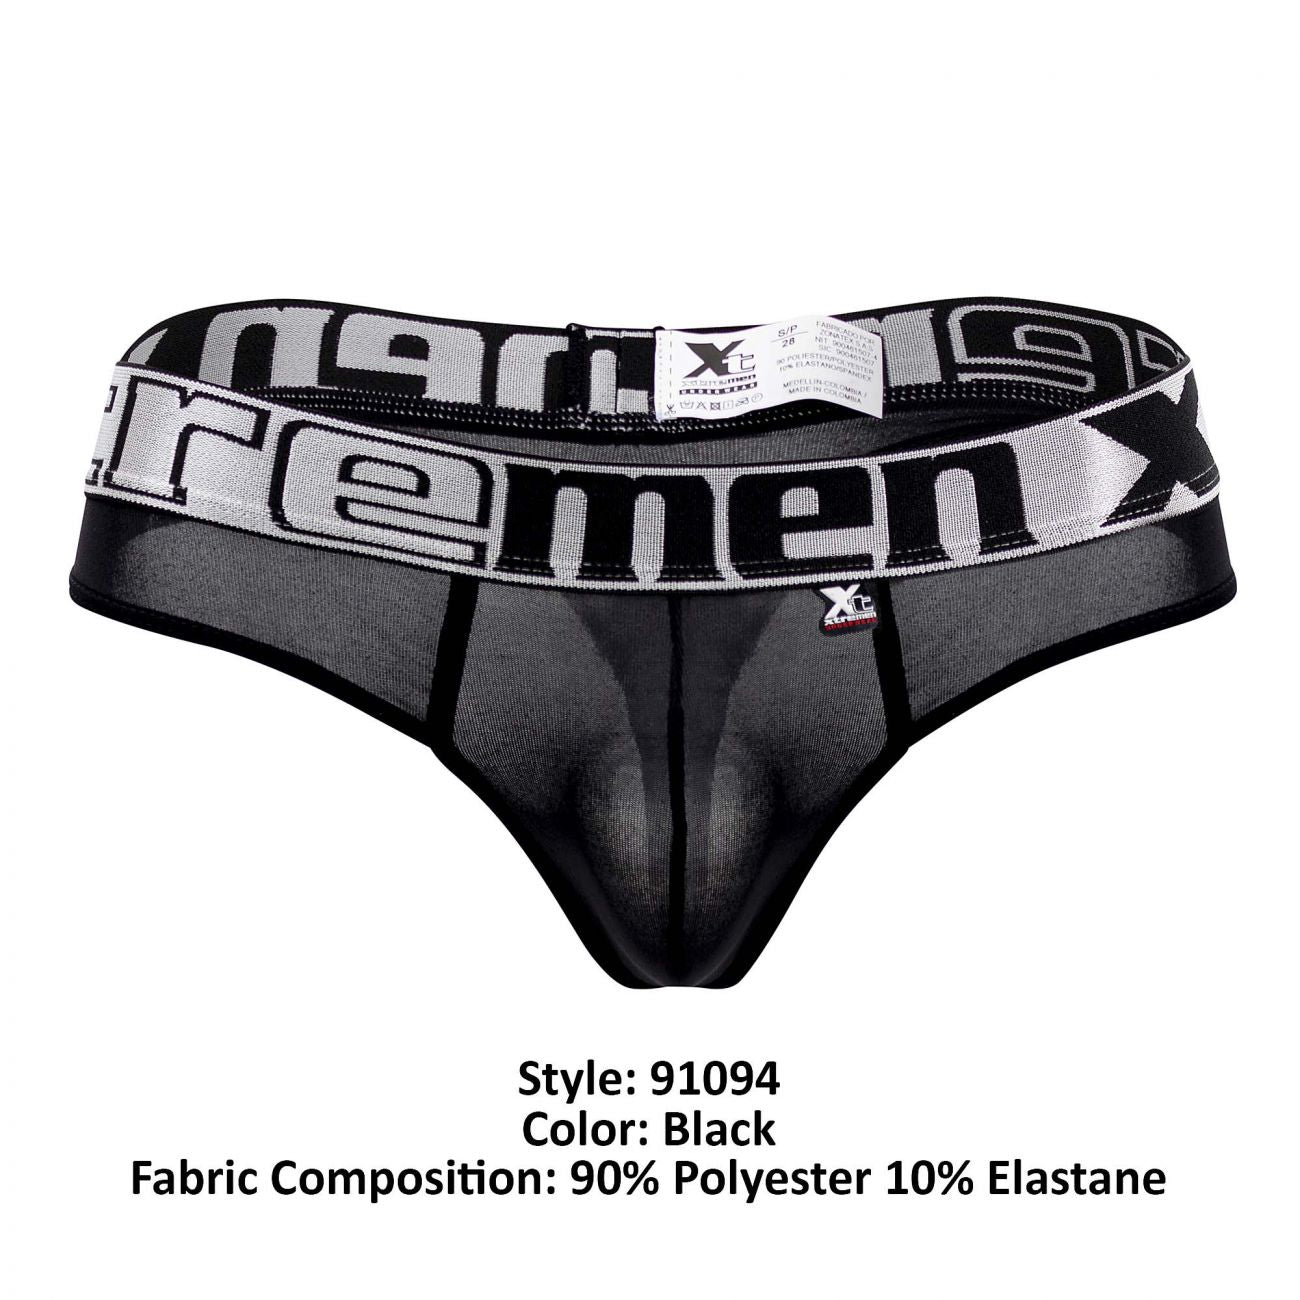 Xtremen 91094 Microfiber Thongs Black